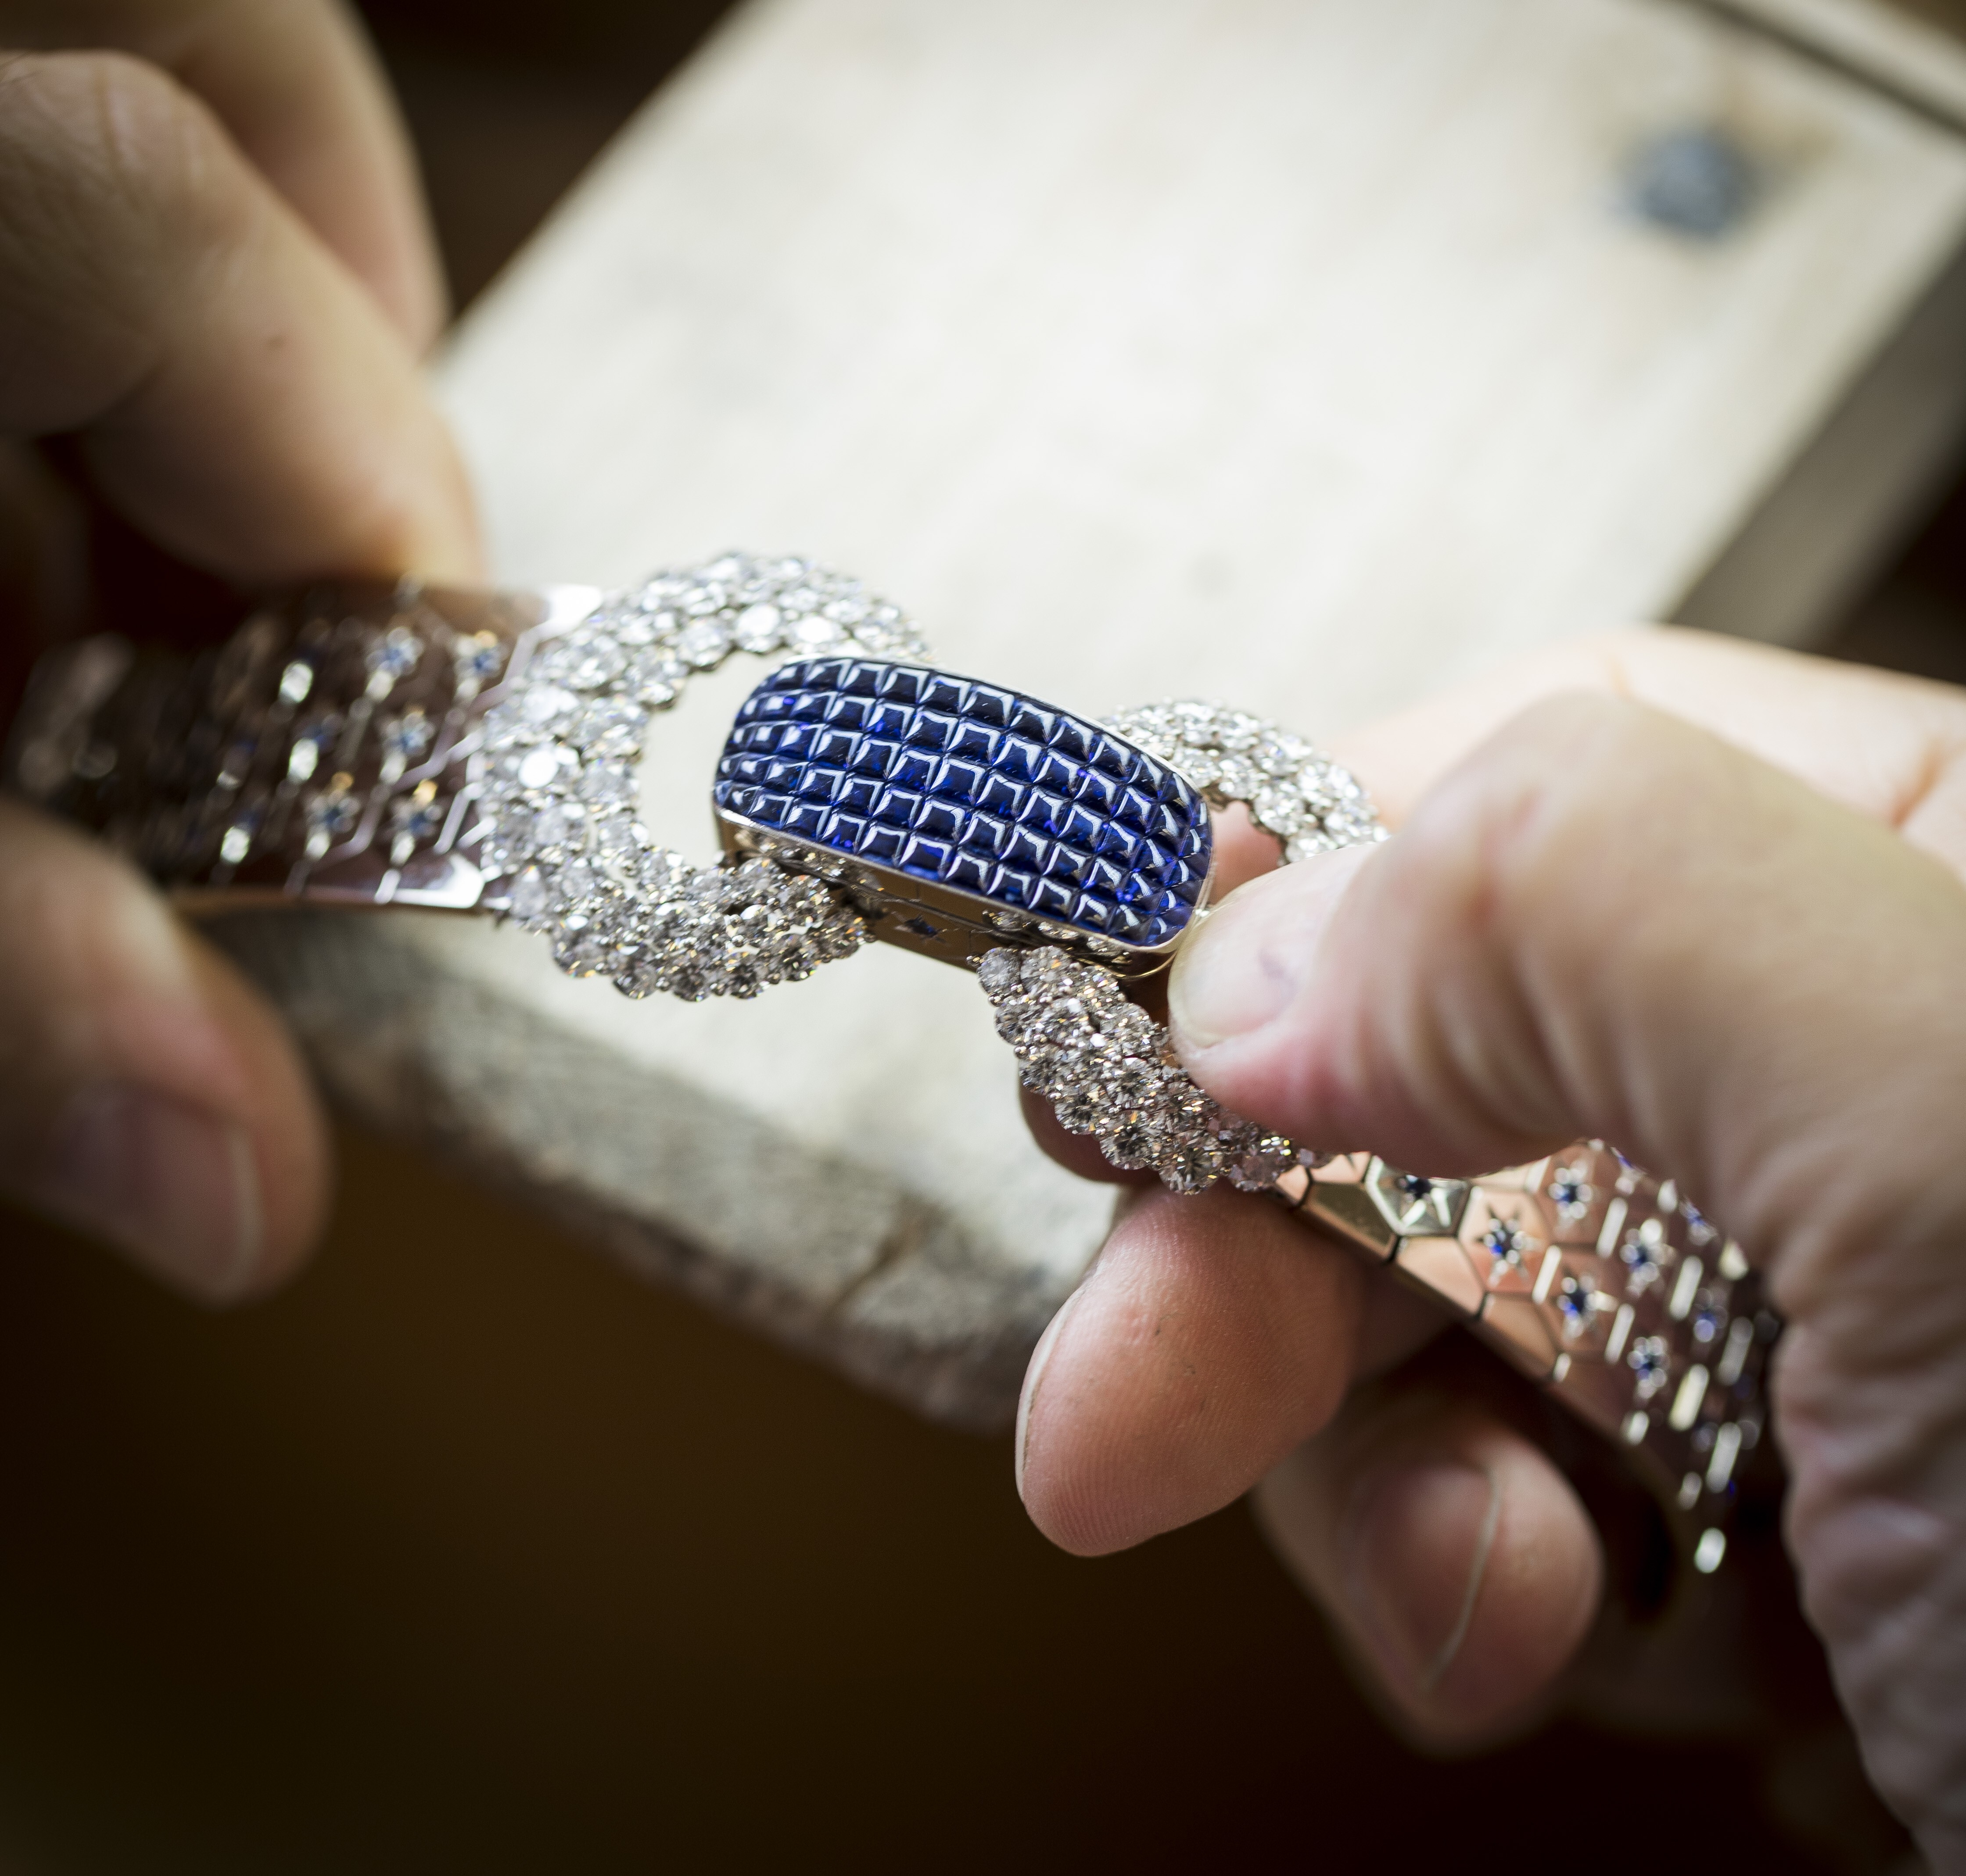 Highly skilled craftsmanship goes into concealing a secret watch within Van Cleef & Arpels delicate bracelets. Photos: Van Cleef & Arpels